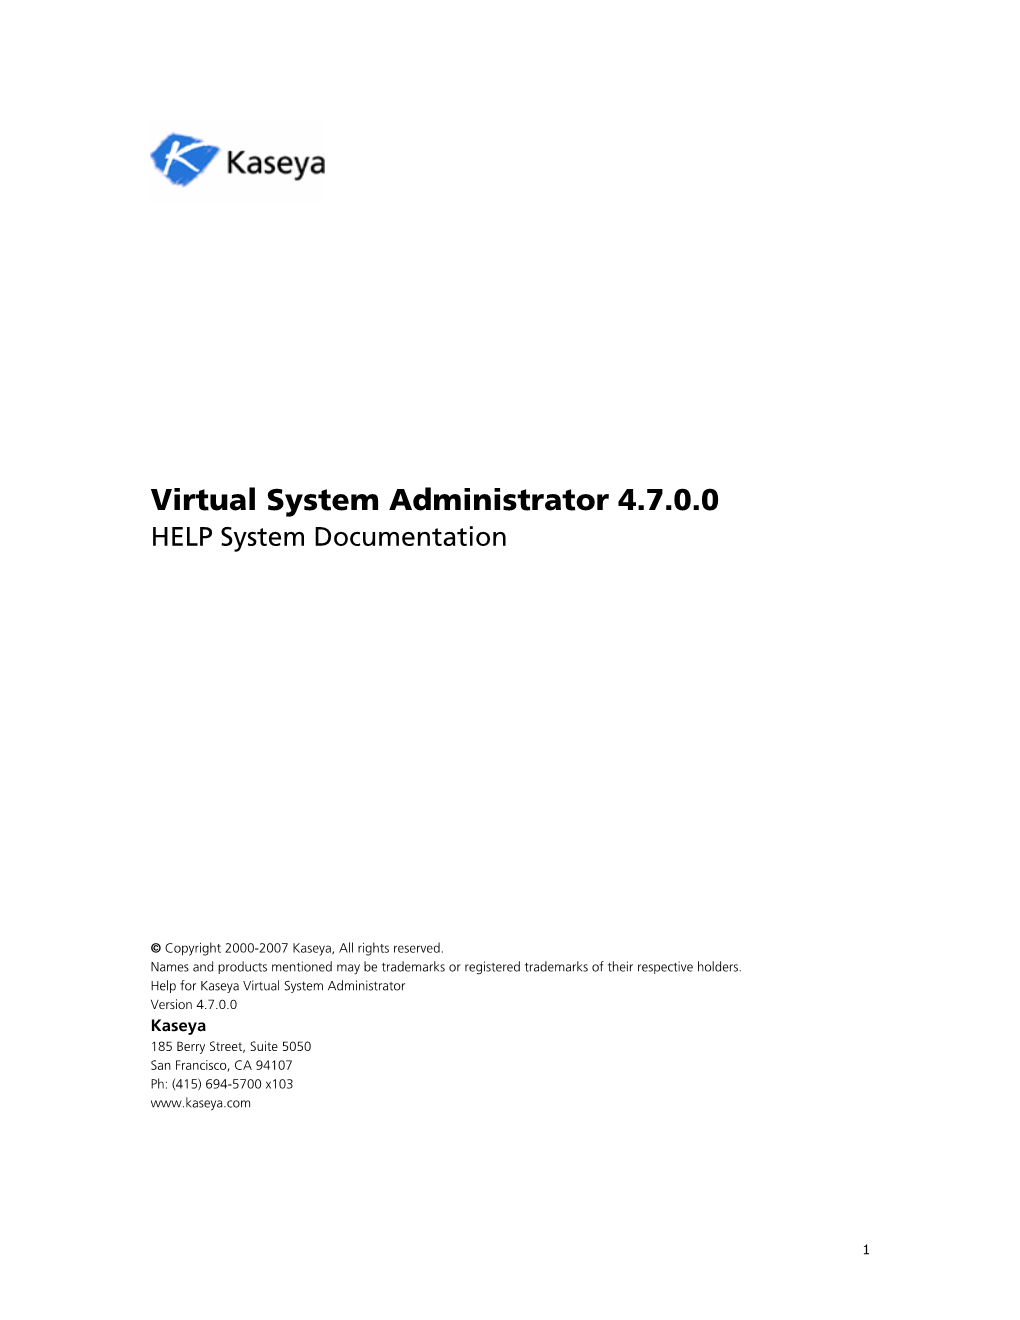 Virtual System Administrator 4.7.0.0 HELP System Documentation